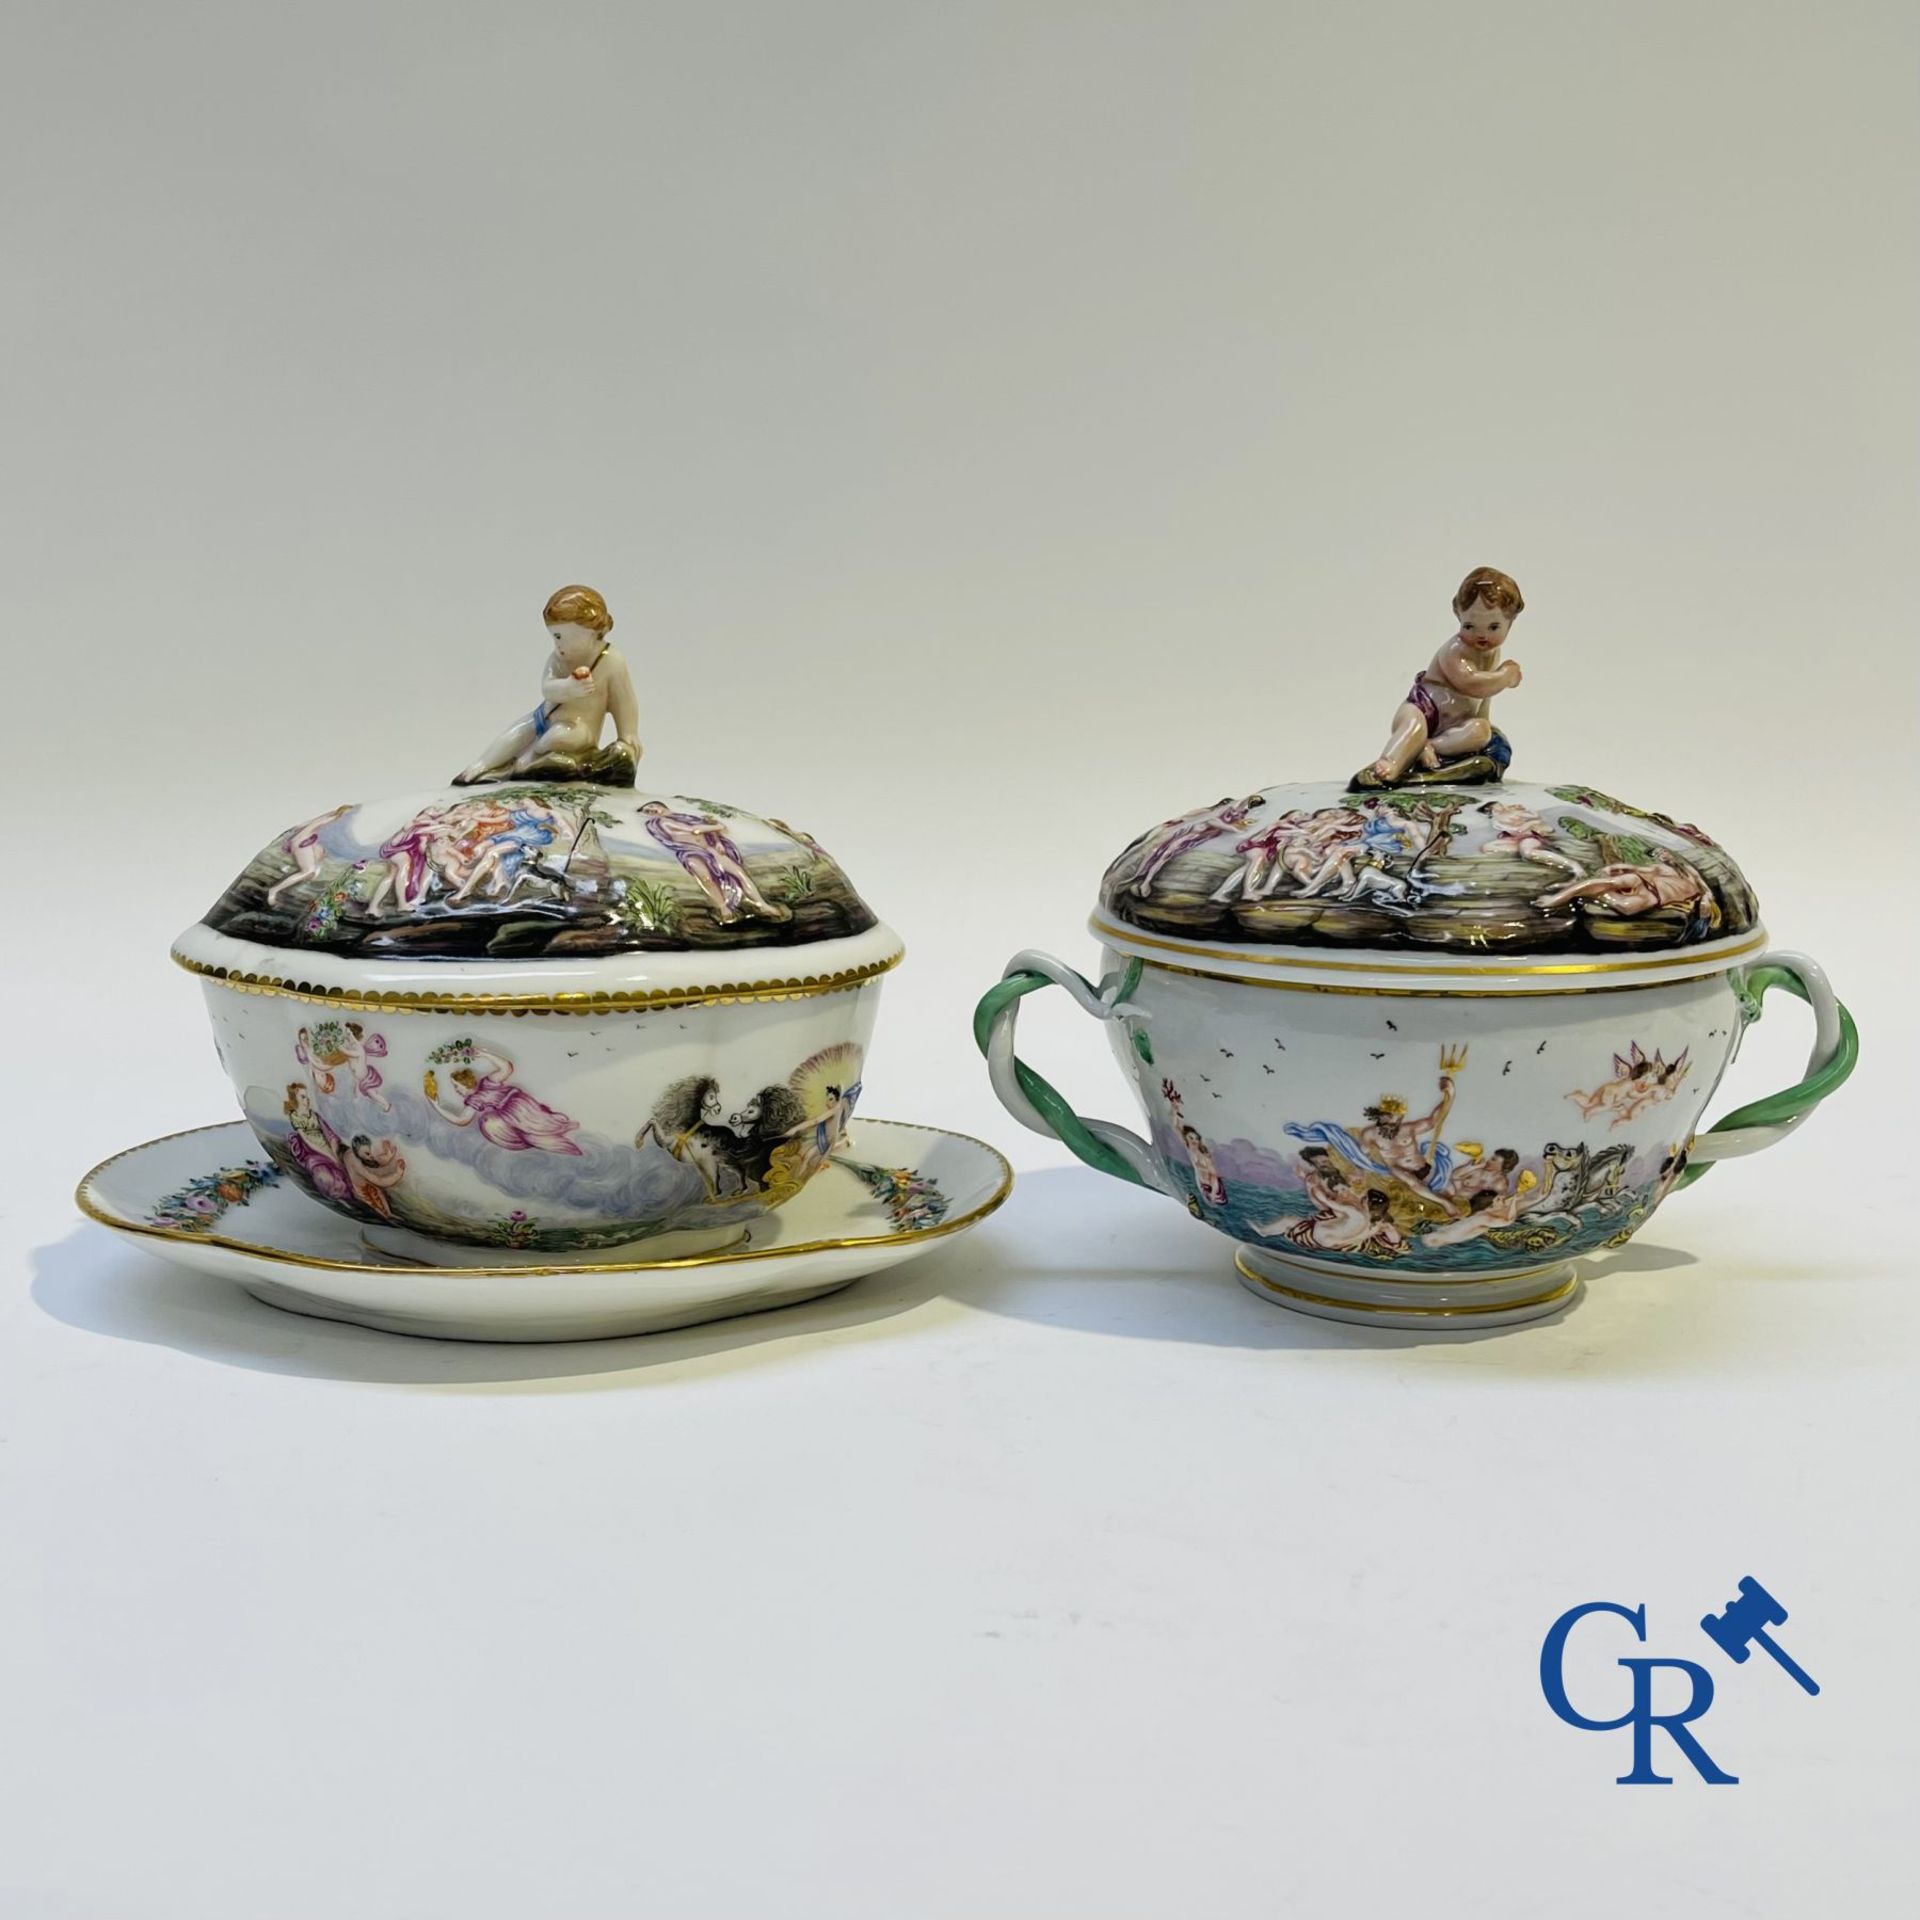 Porcelain: 2 pieces of fine porcelain with mythological scenes. 19th century.